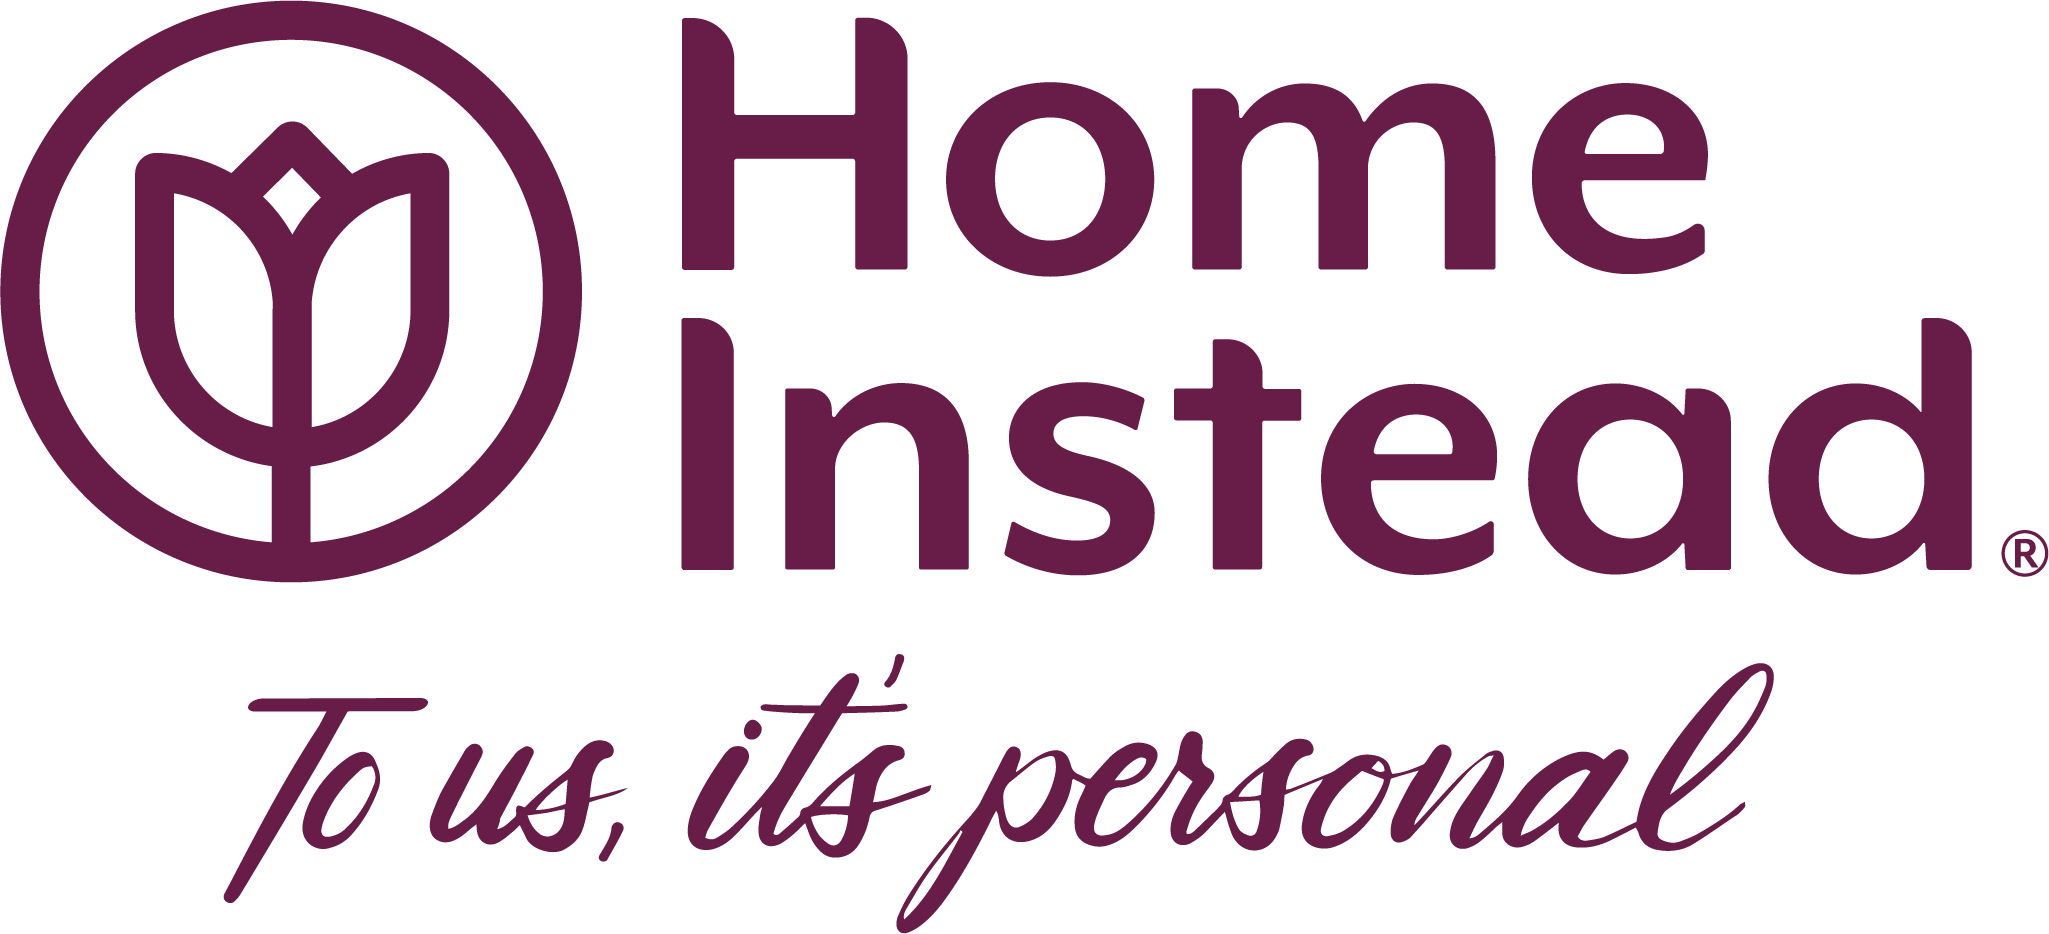 Home Instead 150/161 Company Logo